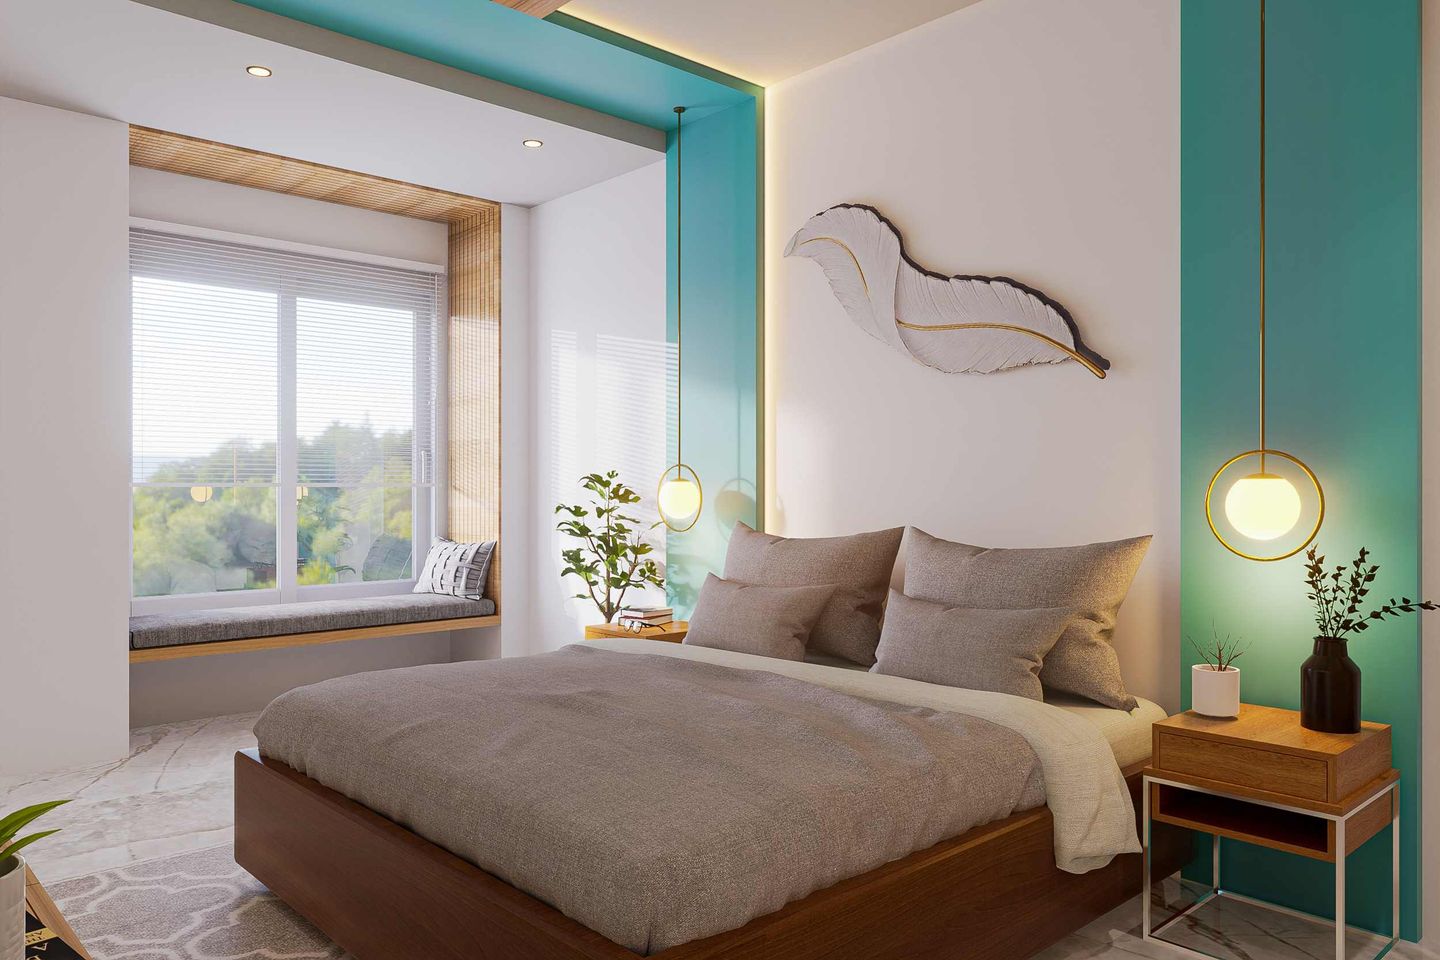 Bedroom Design With Light Blue Walls - Livspace